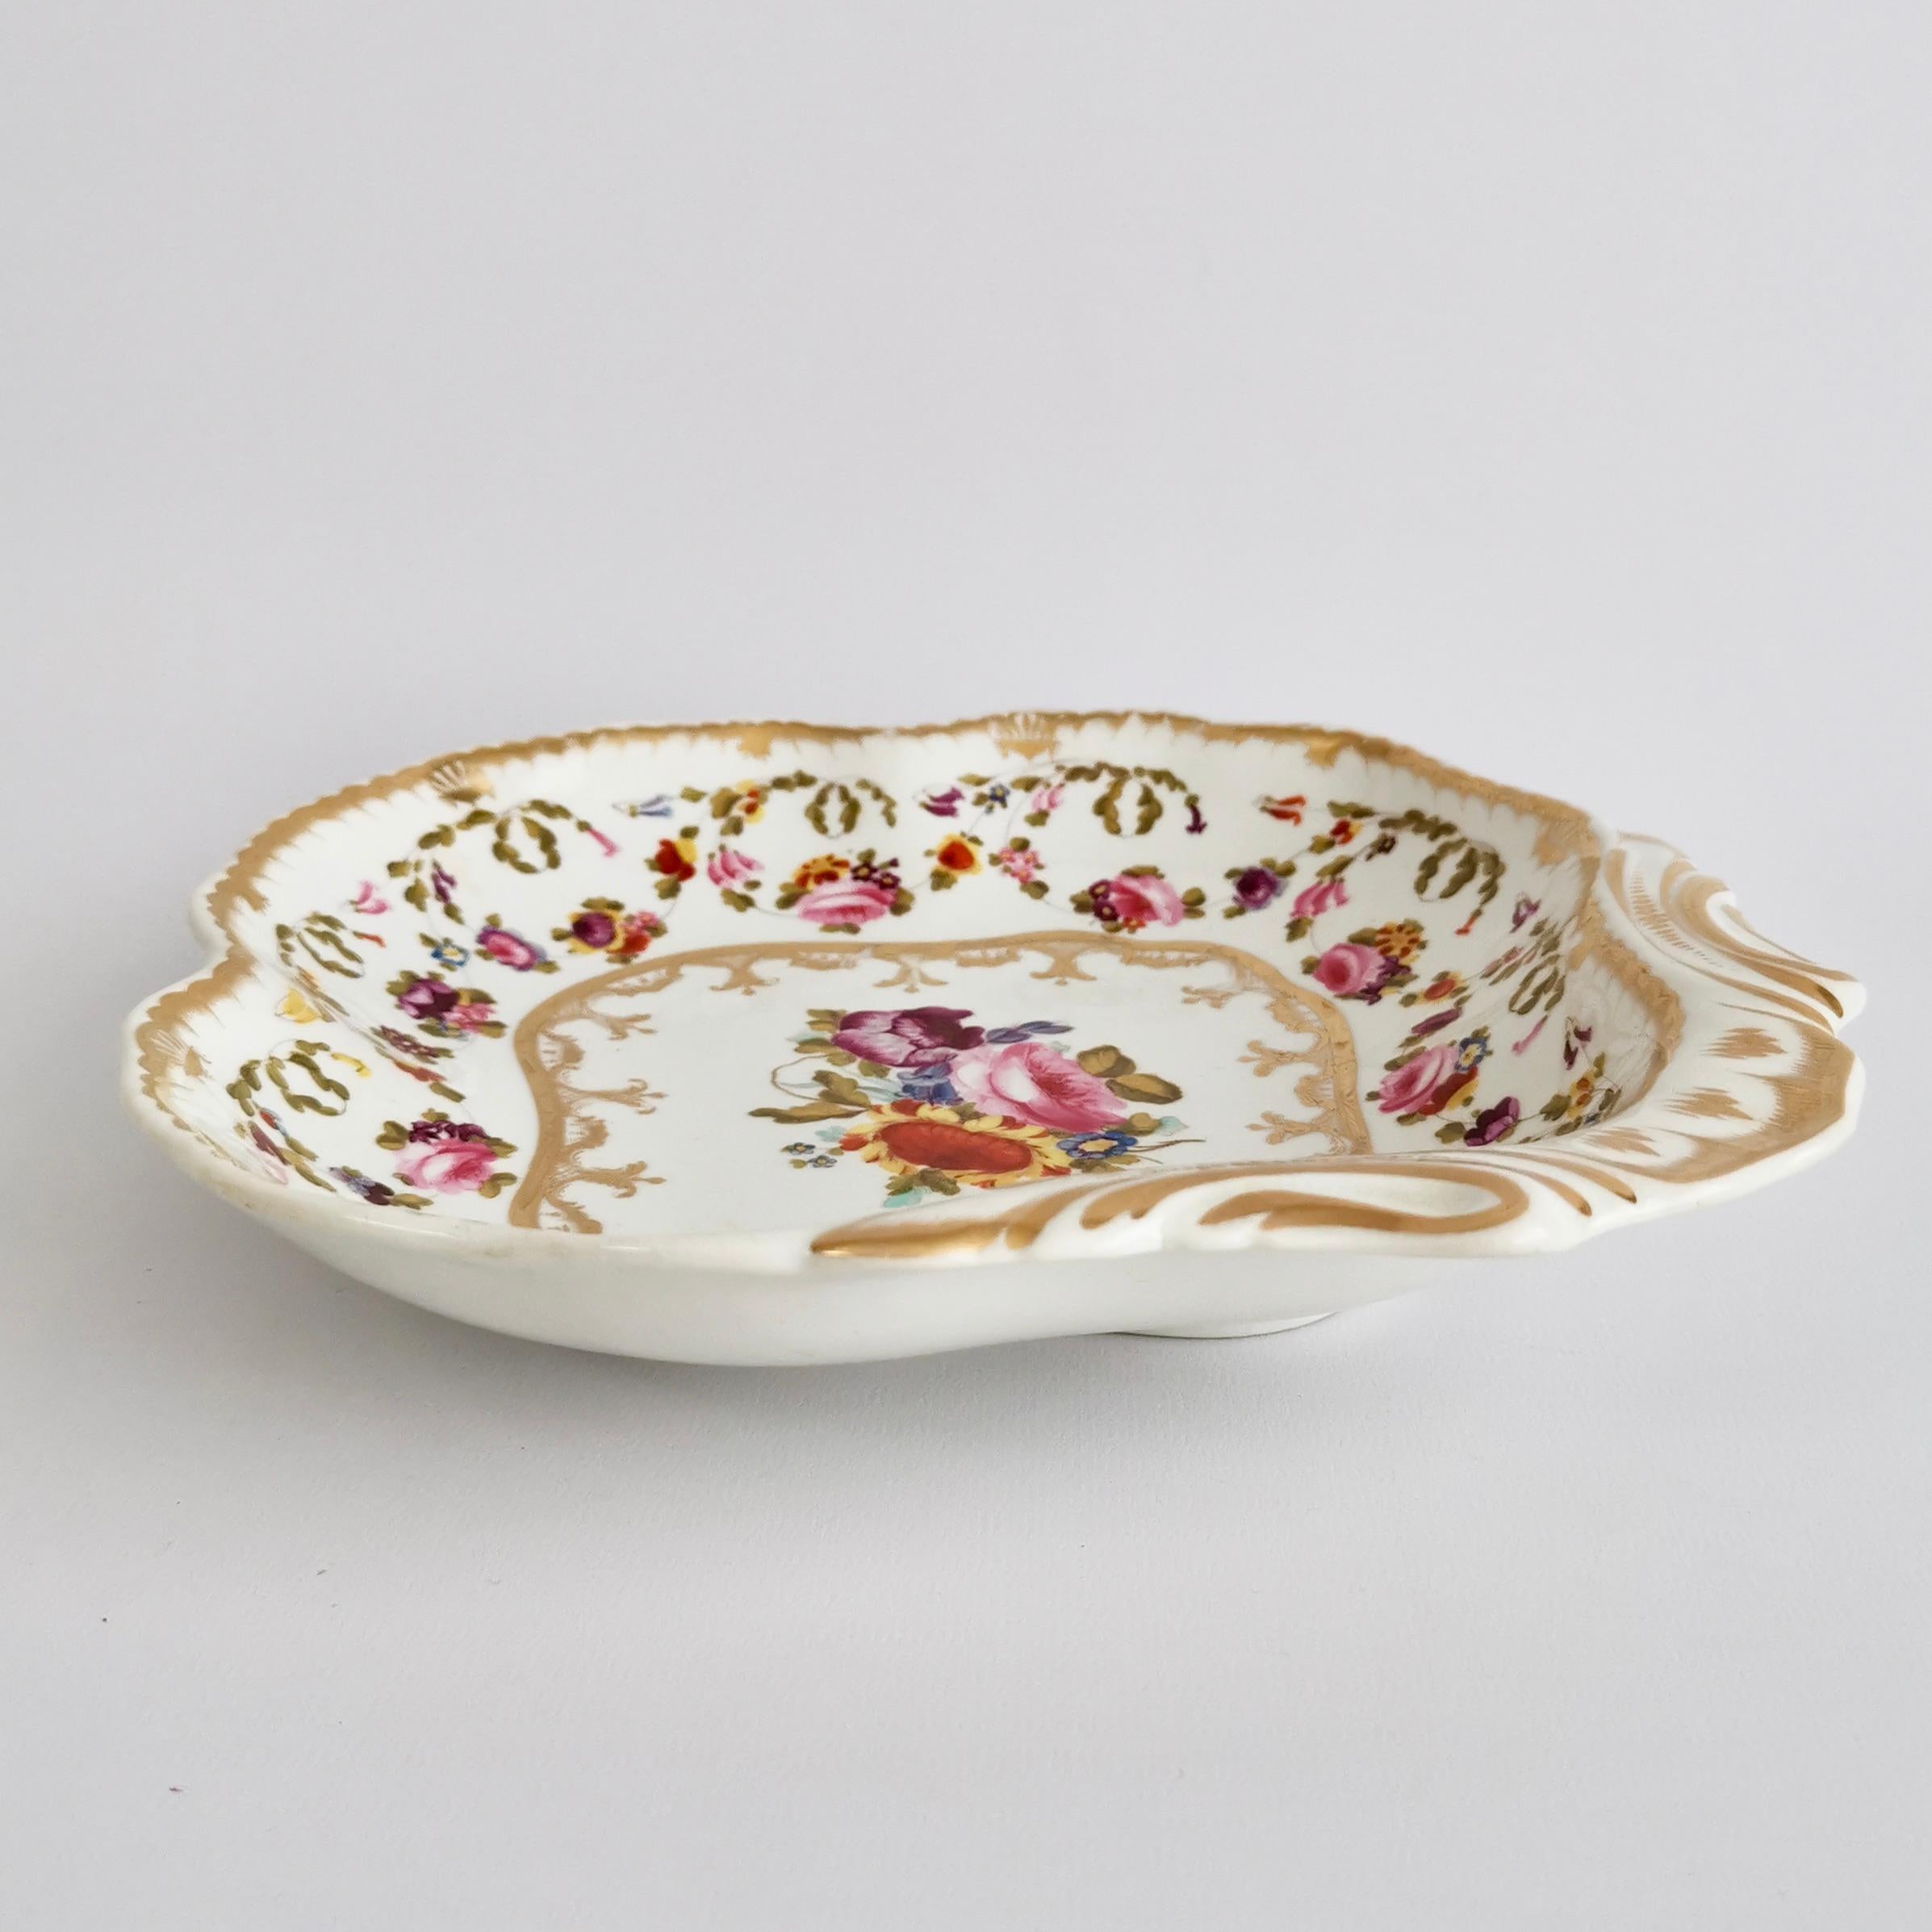 Bloor Derby Shell Dish, White, Floral Sprigs Moses Webster, Regency, 1820-1825 For Sale 3